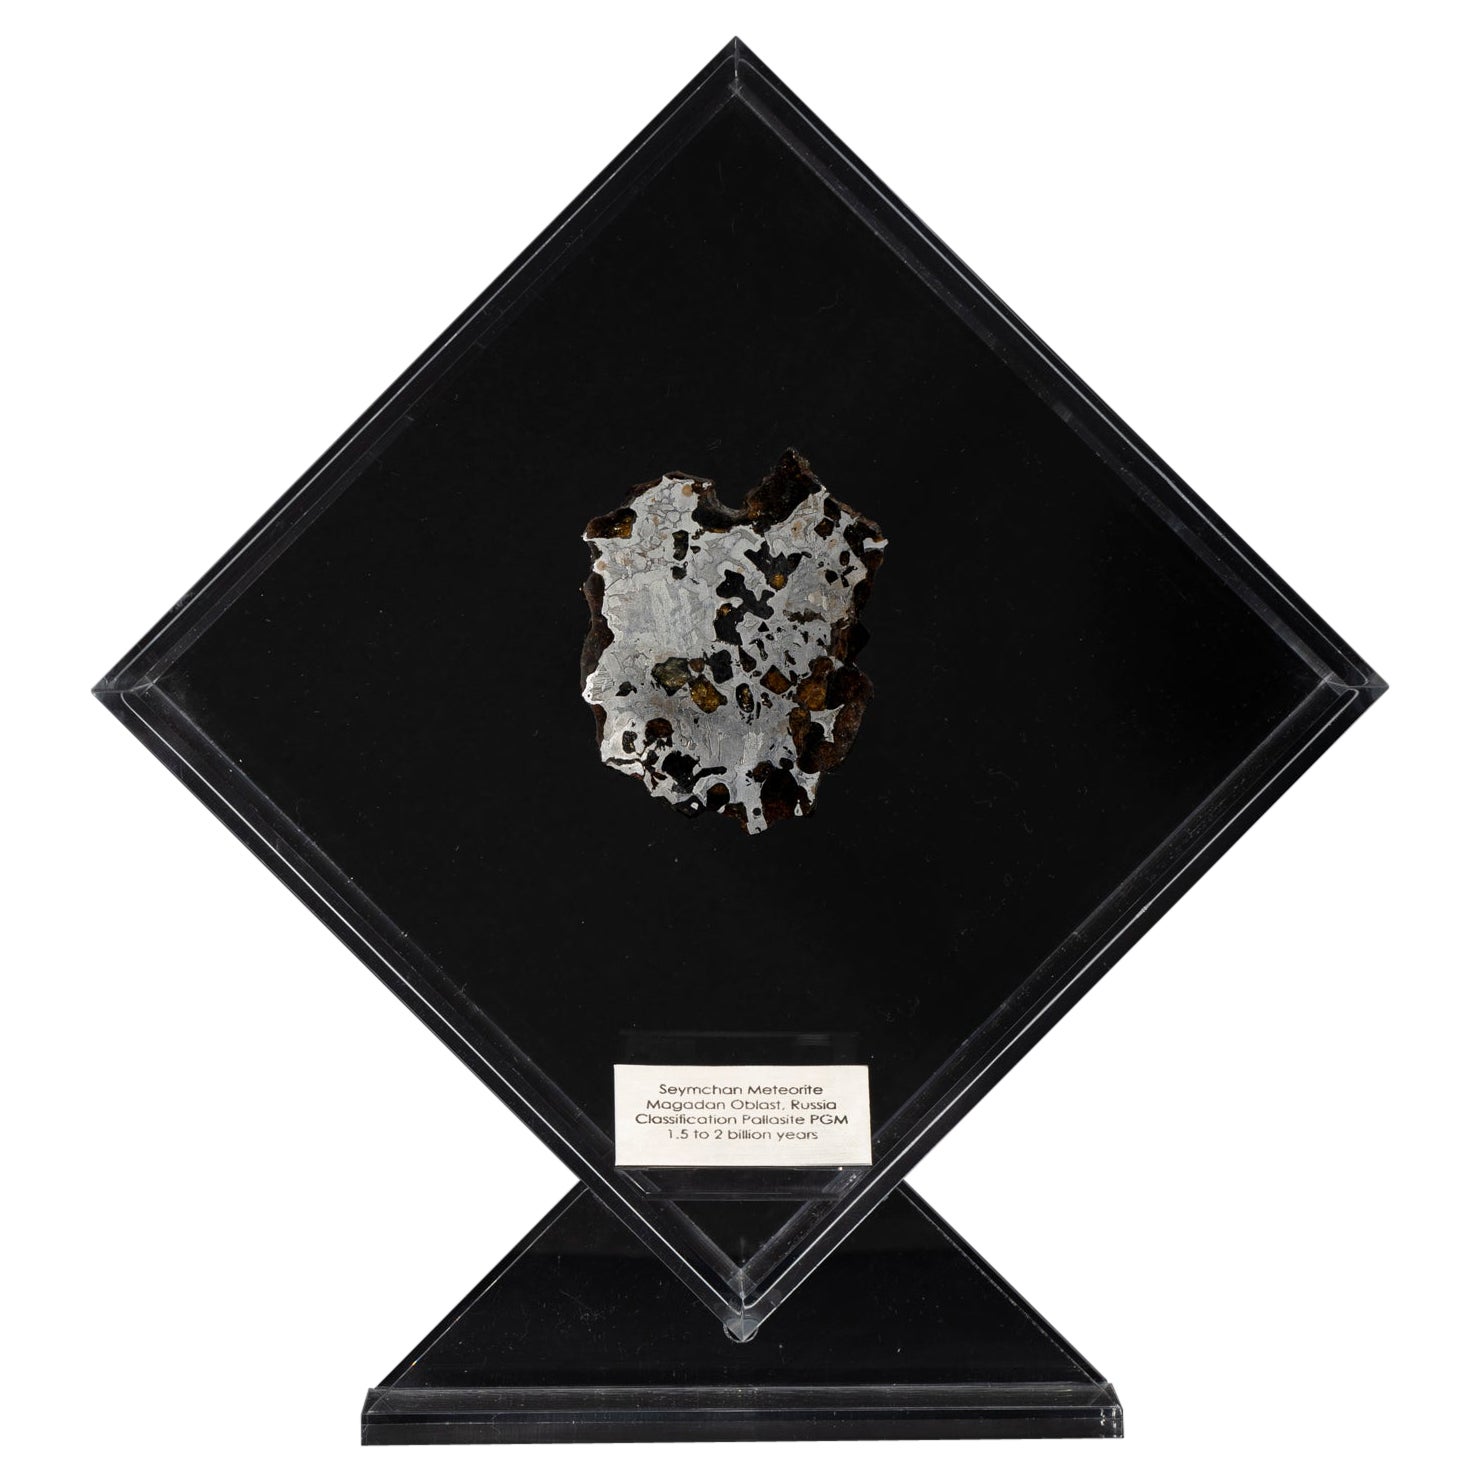 Original Design, Seymchan with Olivine Meteorite in a Acrylic Display